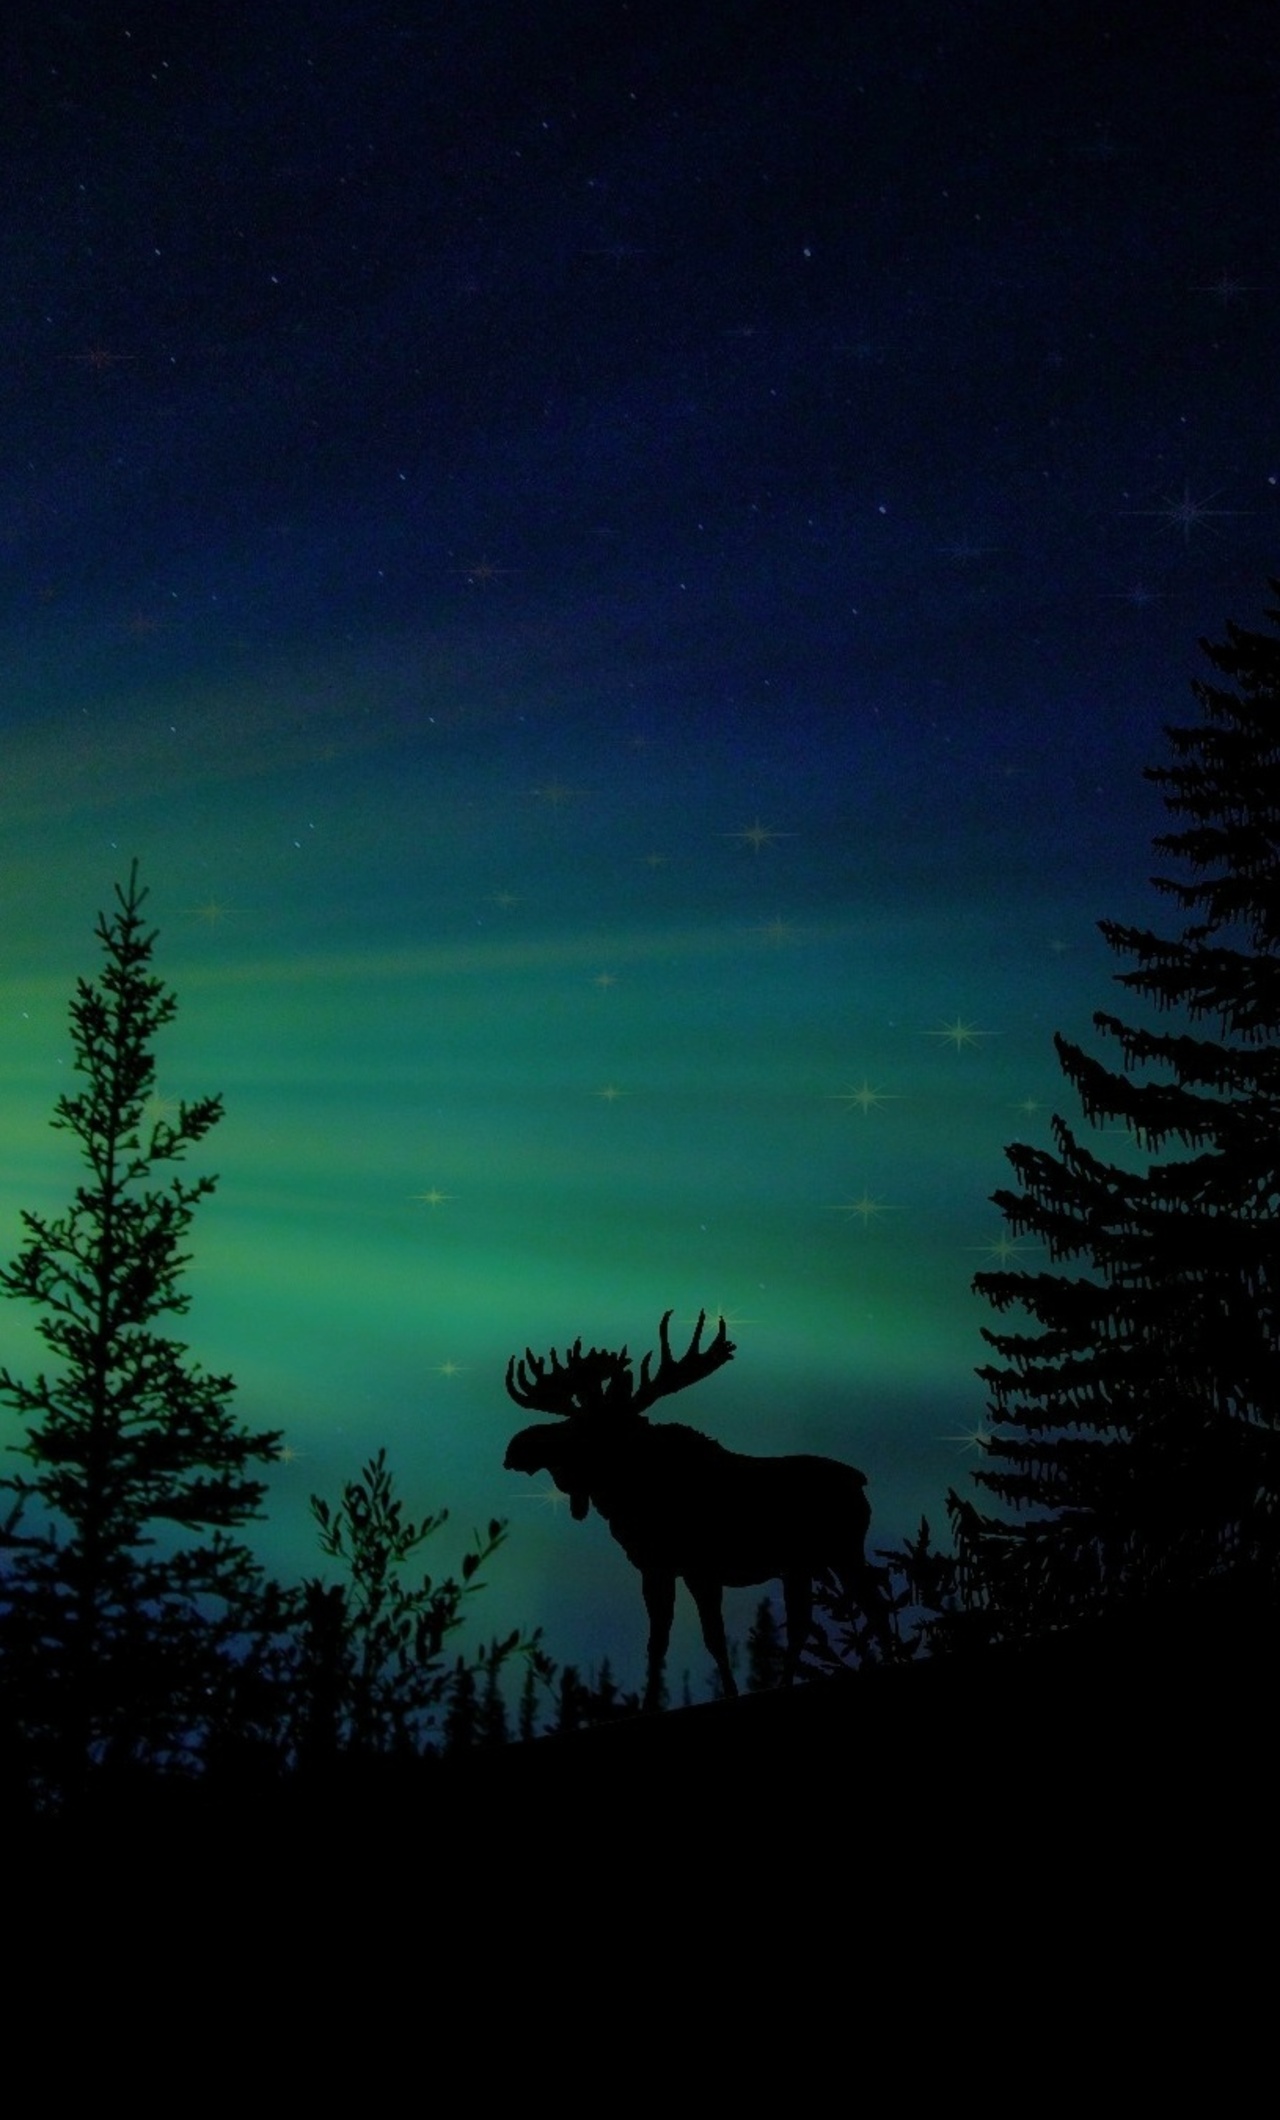 1000 Moose Pictures  Download Free Images on Unsplash